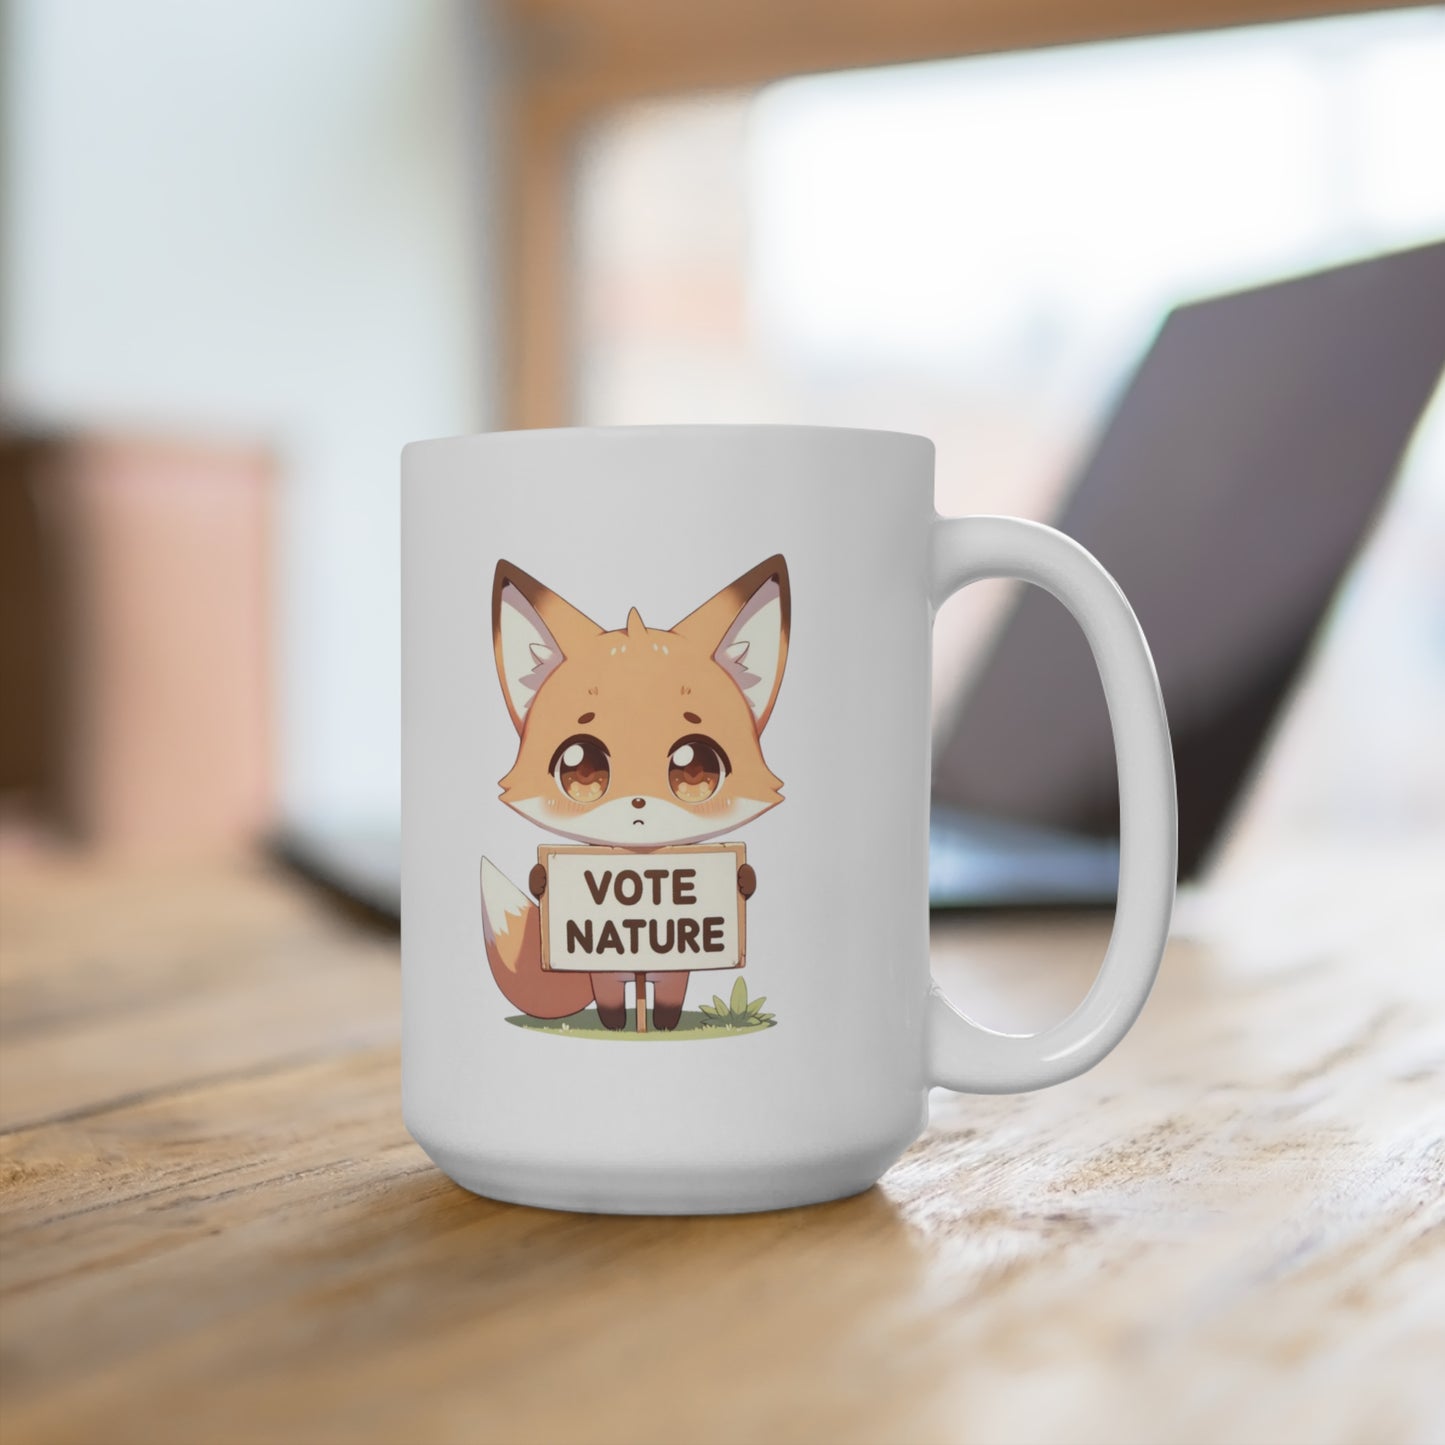 Inspirational Cute Fox Statement Coffee Mug (15oz): Vote Nature! Be a Cute Activist!